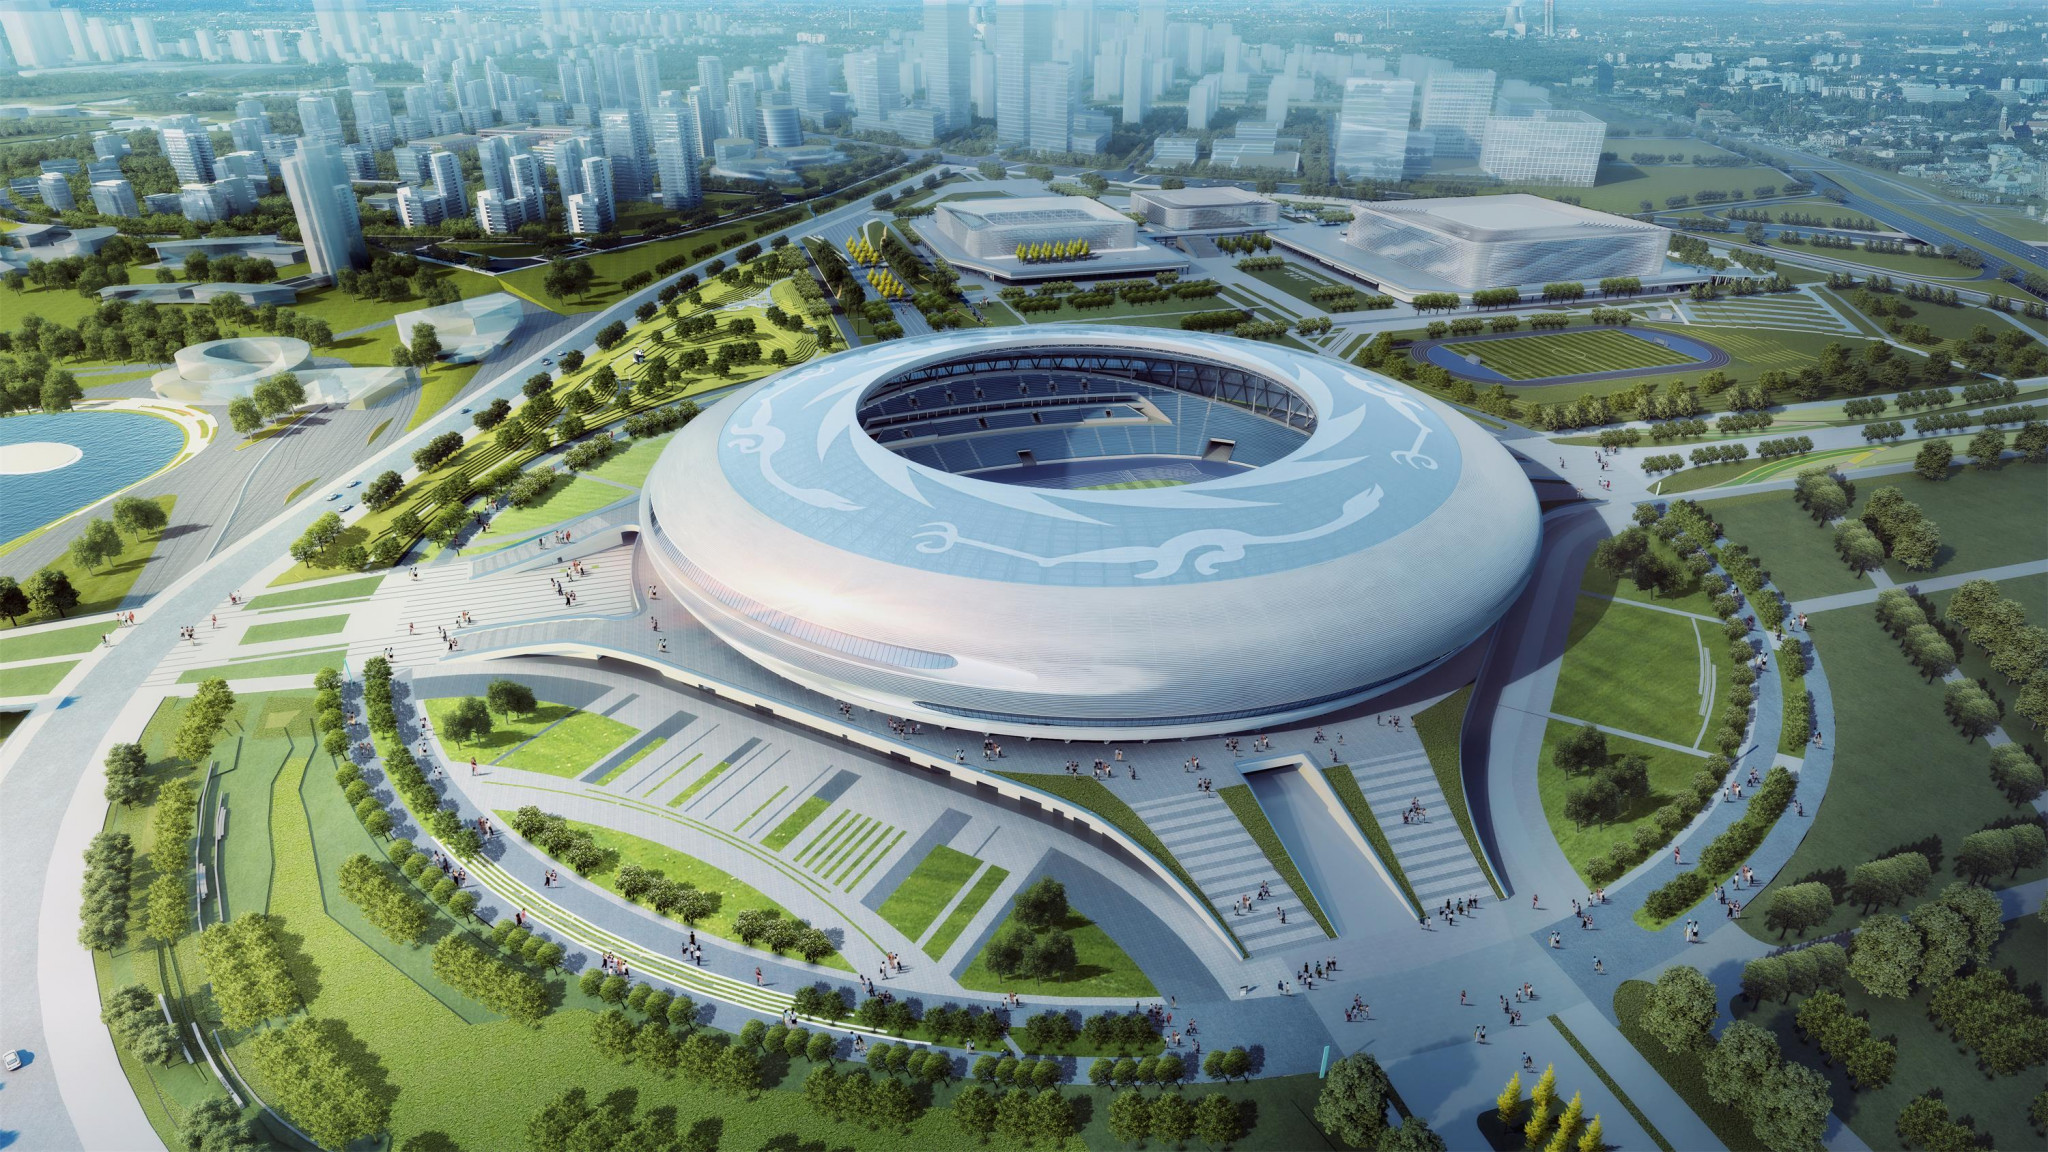 Chengdu is set to host the 2021 Summer World University Games ©Chengdu 2021